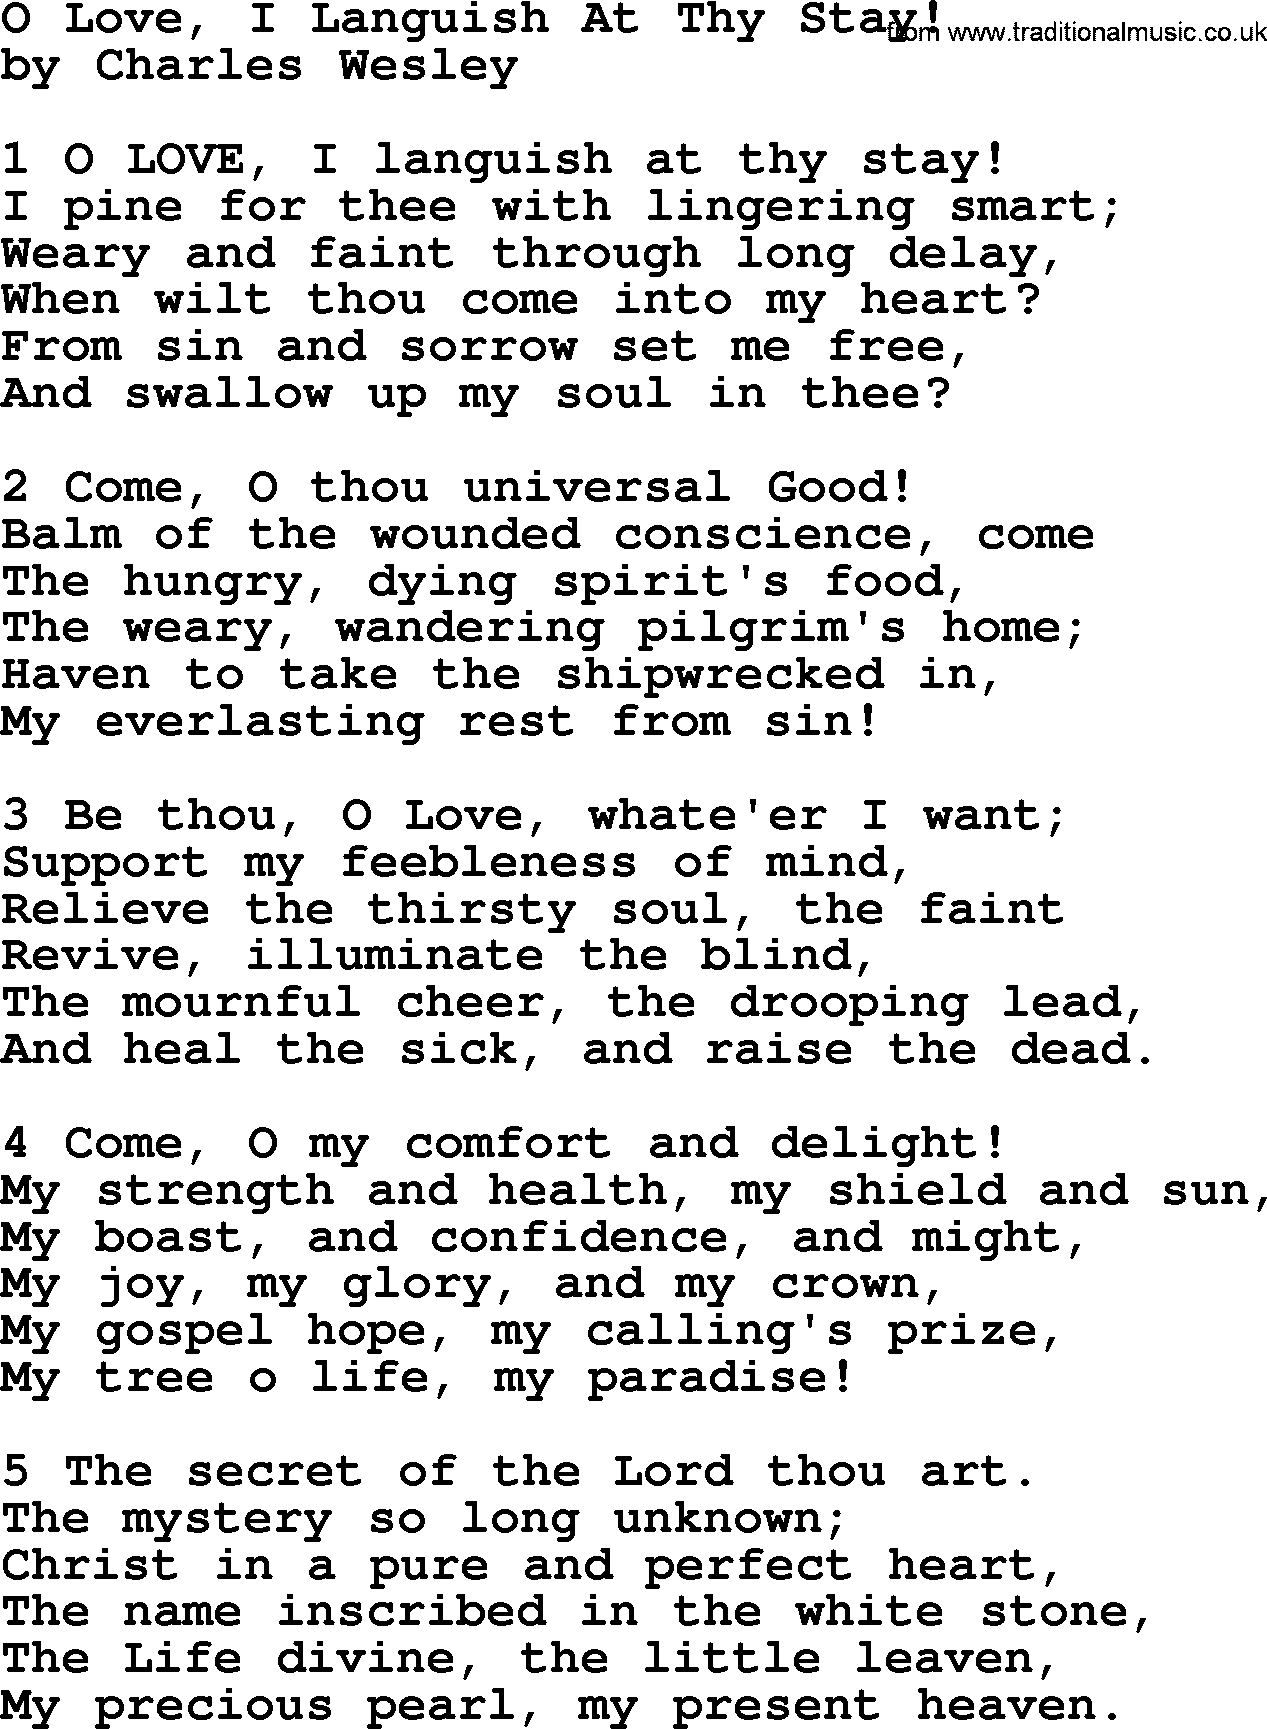 Charles Wesley hymn: O Love, I Languish At Thy Stay!, lyrics